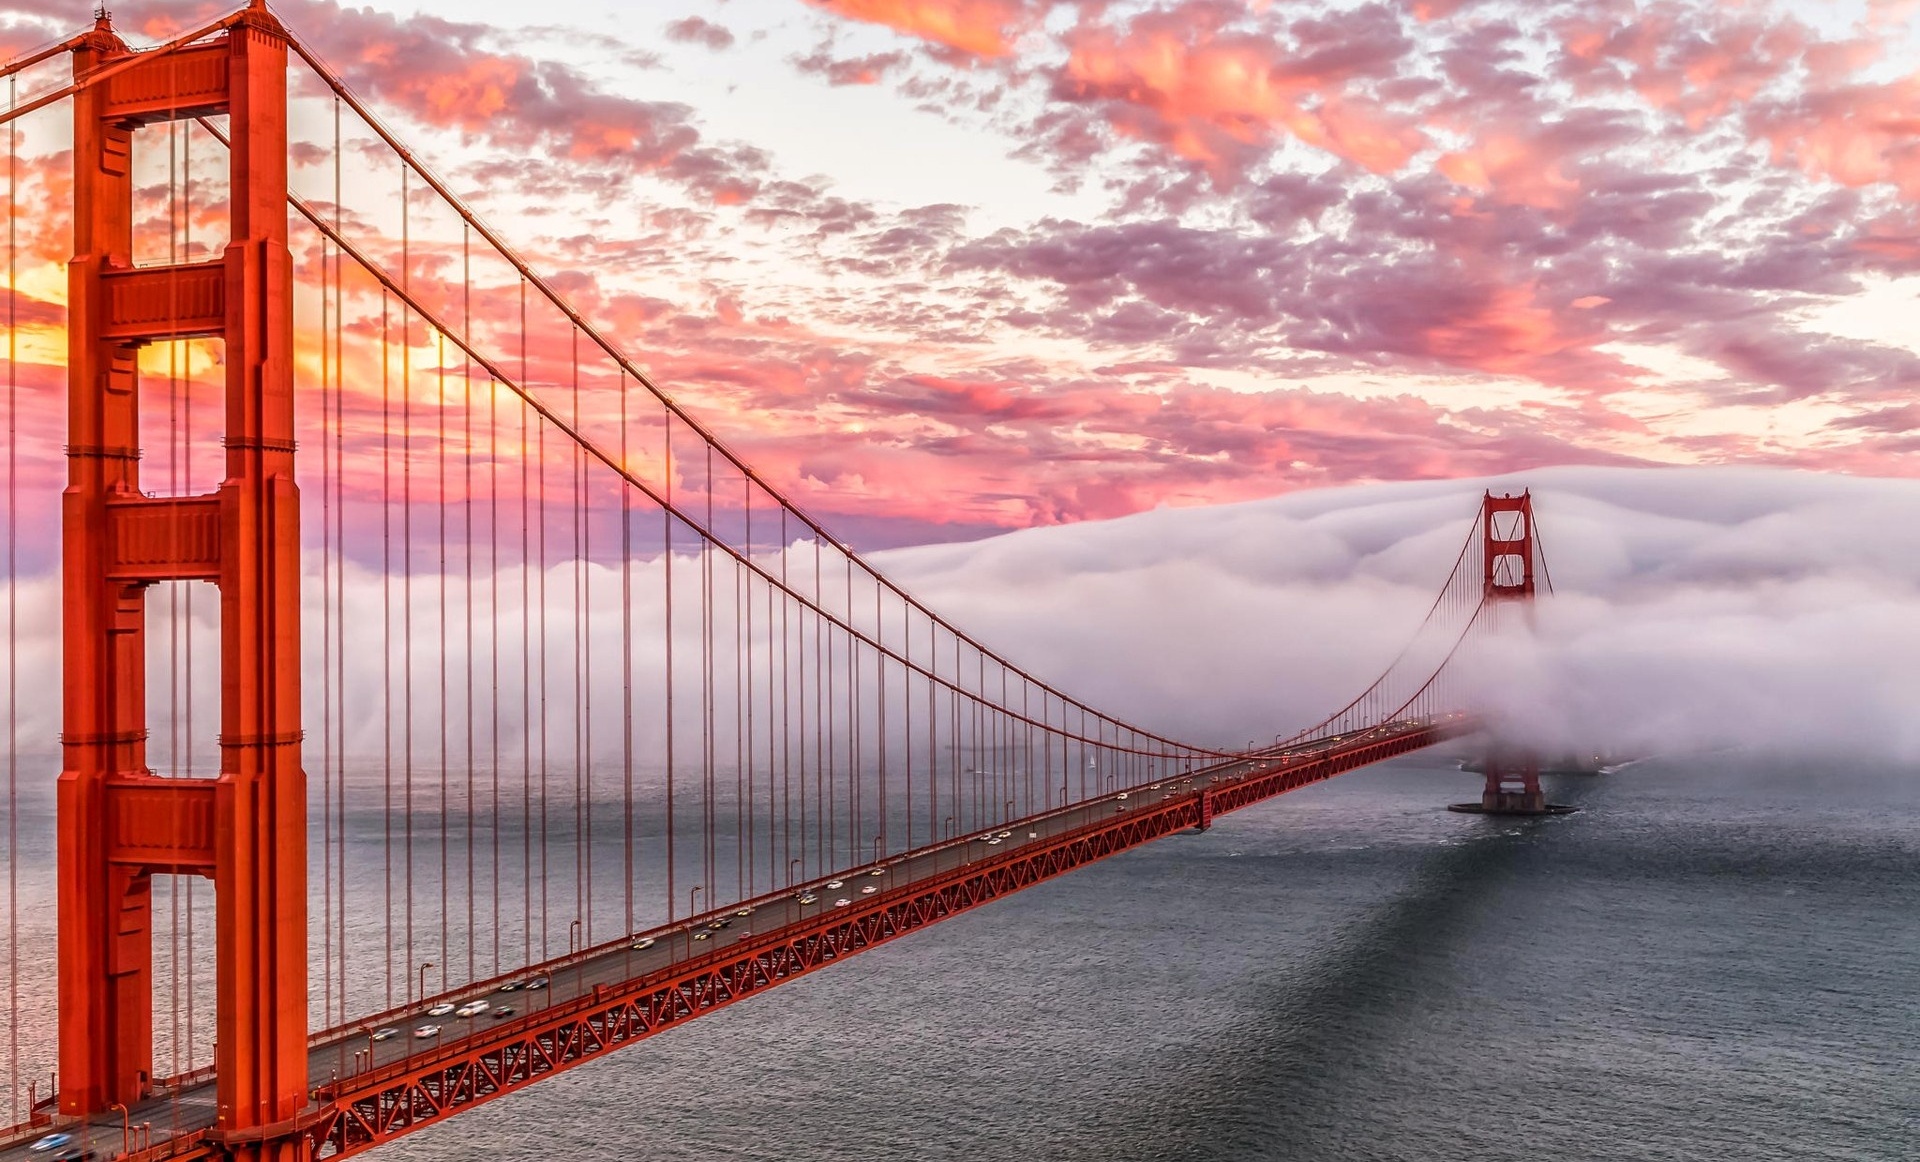 Popular Golden Gate Image for Phone